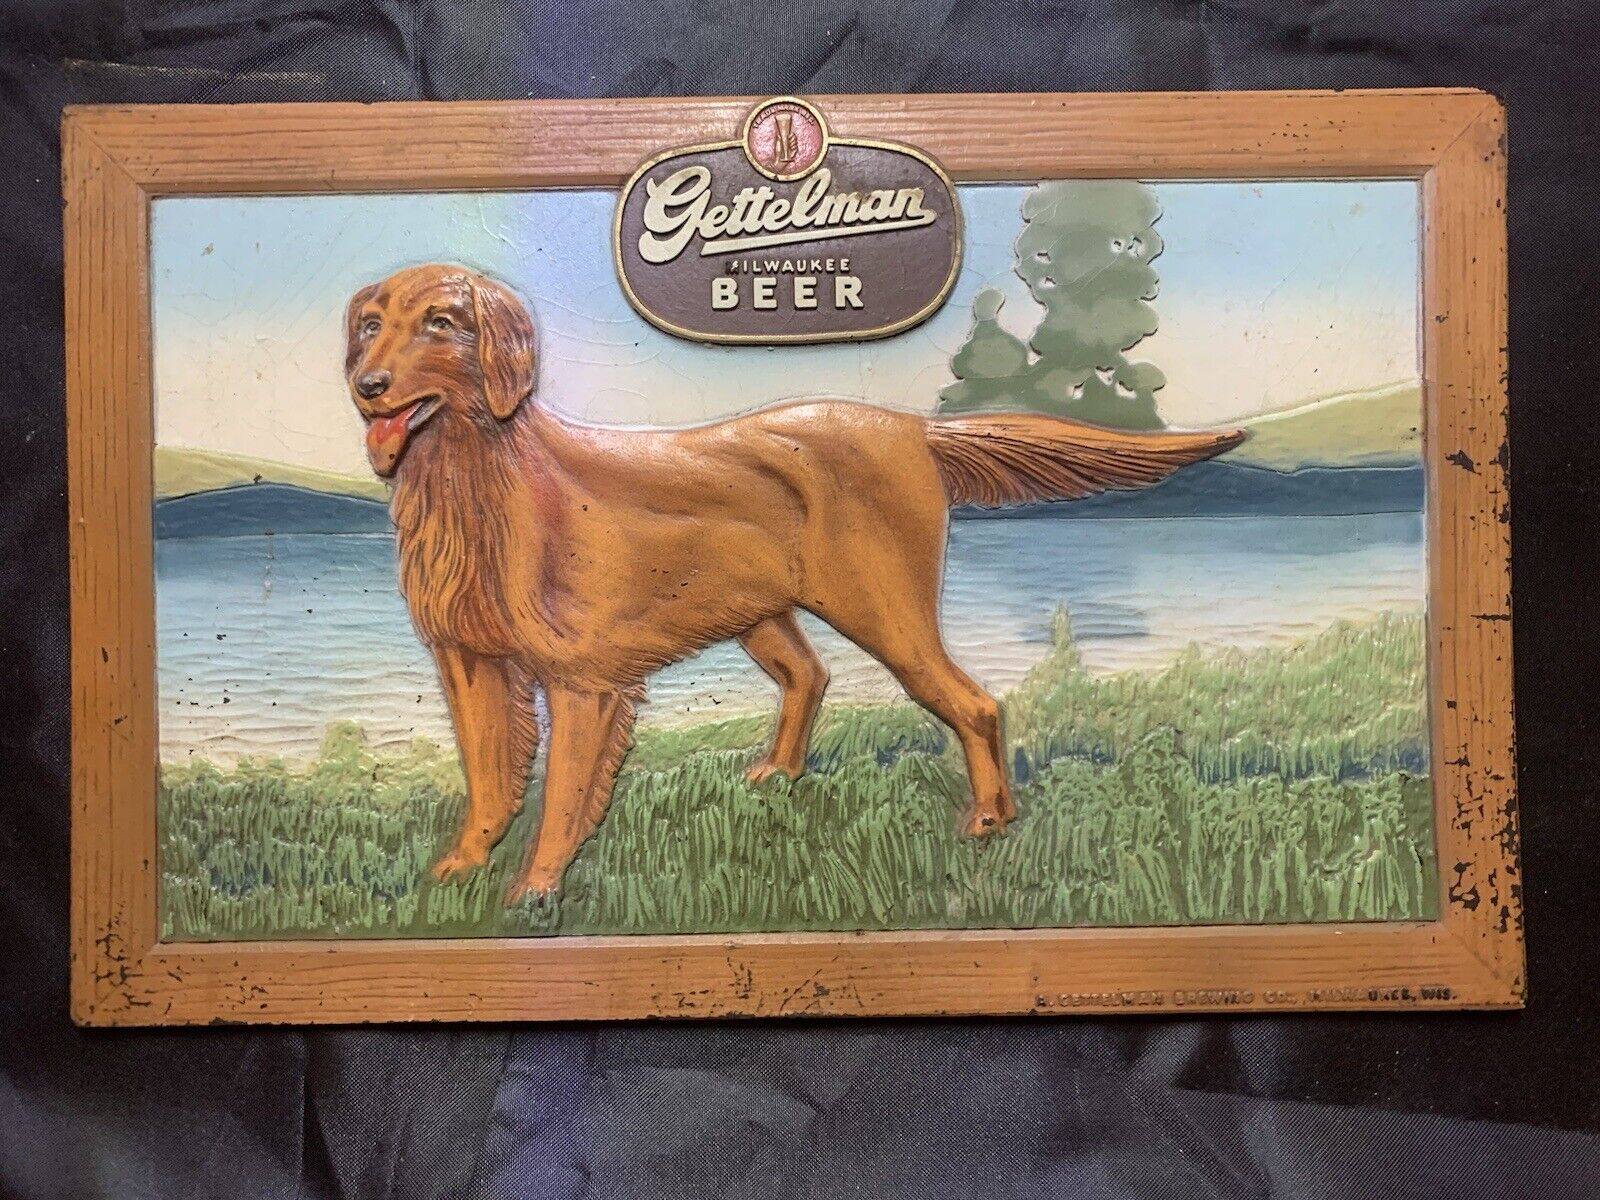 Rare Vintage 1950s Gettelman Beer Retriever Hunting Dog Advertising Sign